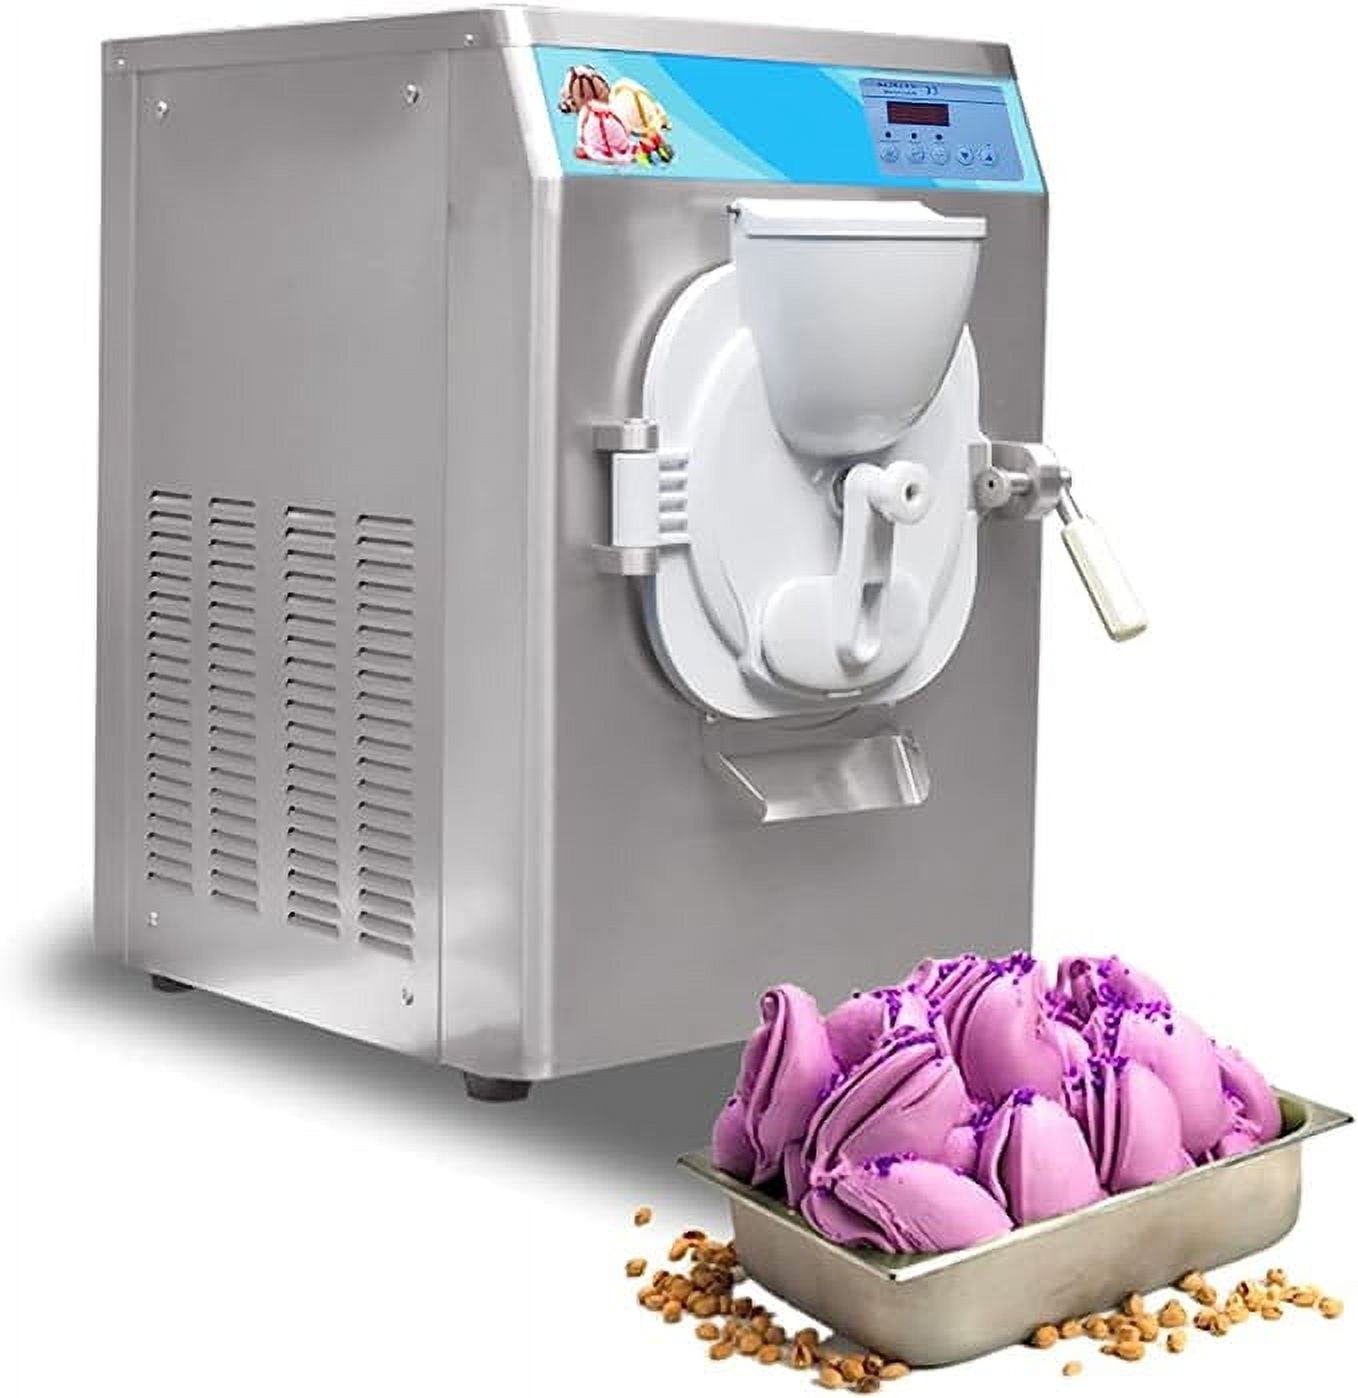 IW.HLMF Fully Automatic Mini Homemade Ice Cream Maker,Soft Serve Ice Cream  Machine,Small Ice Maker Machine Counter Top Blue